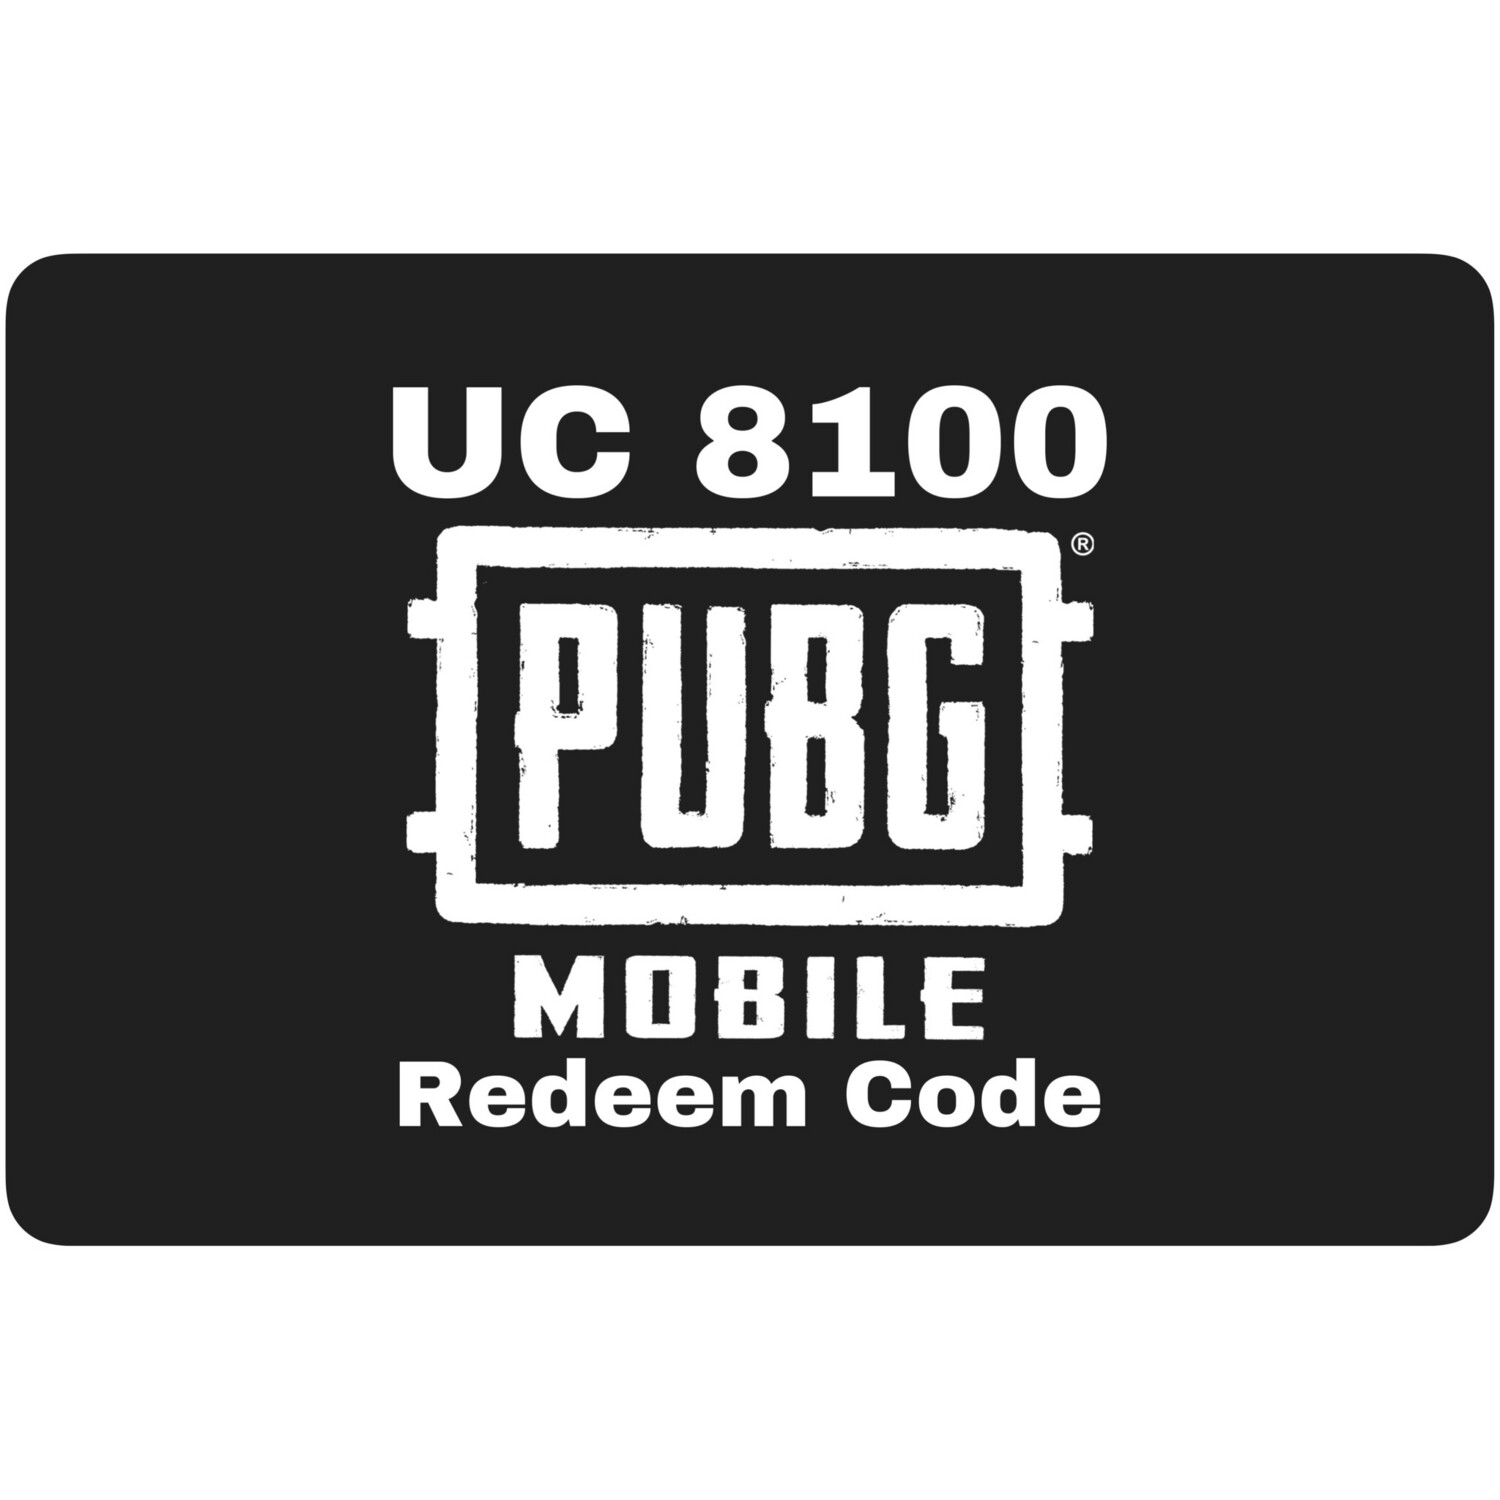 PUBG Mobile UC 8100 Redeem Code